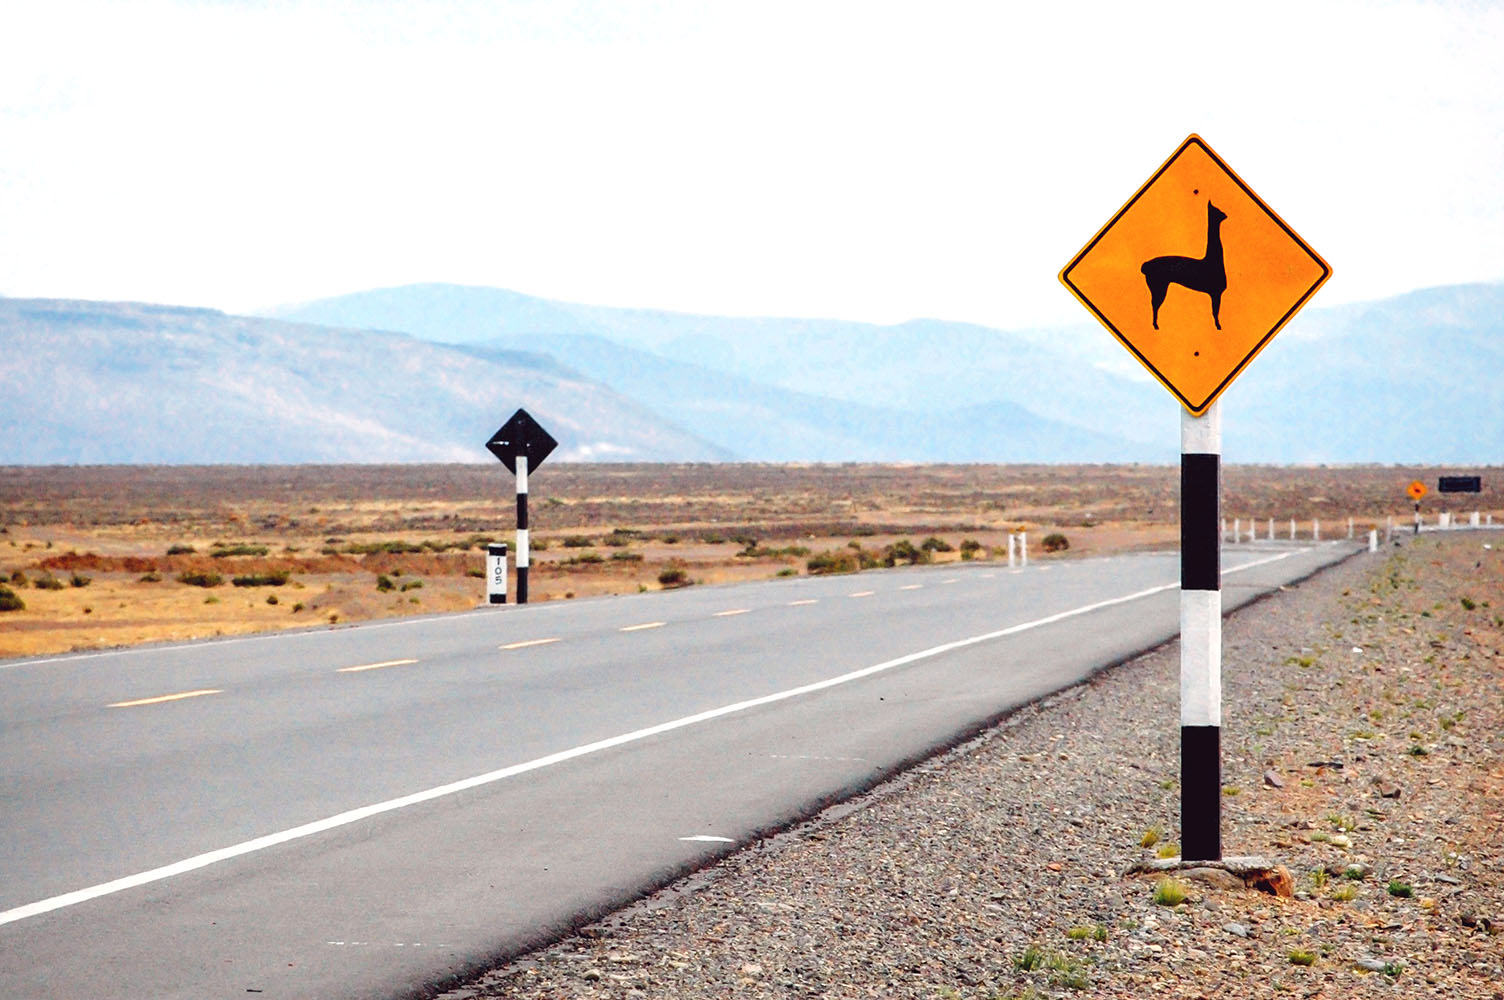 Llama road sign in Peru, Andes, South America